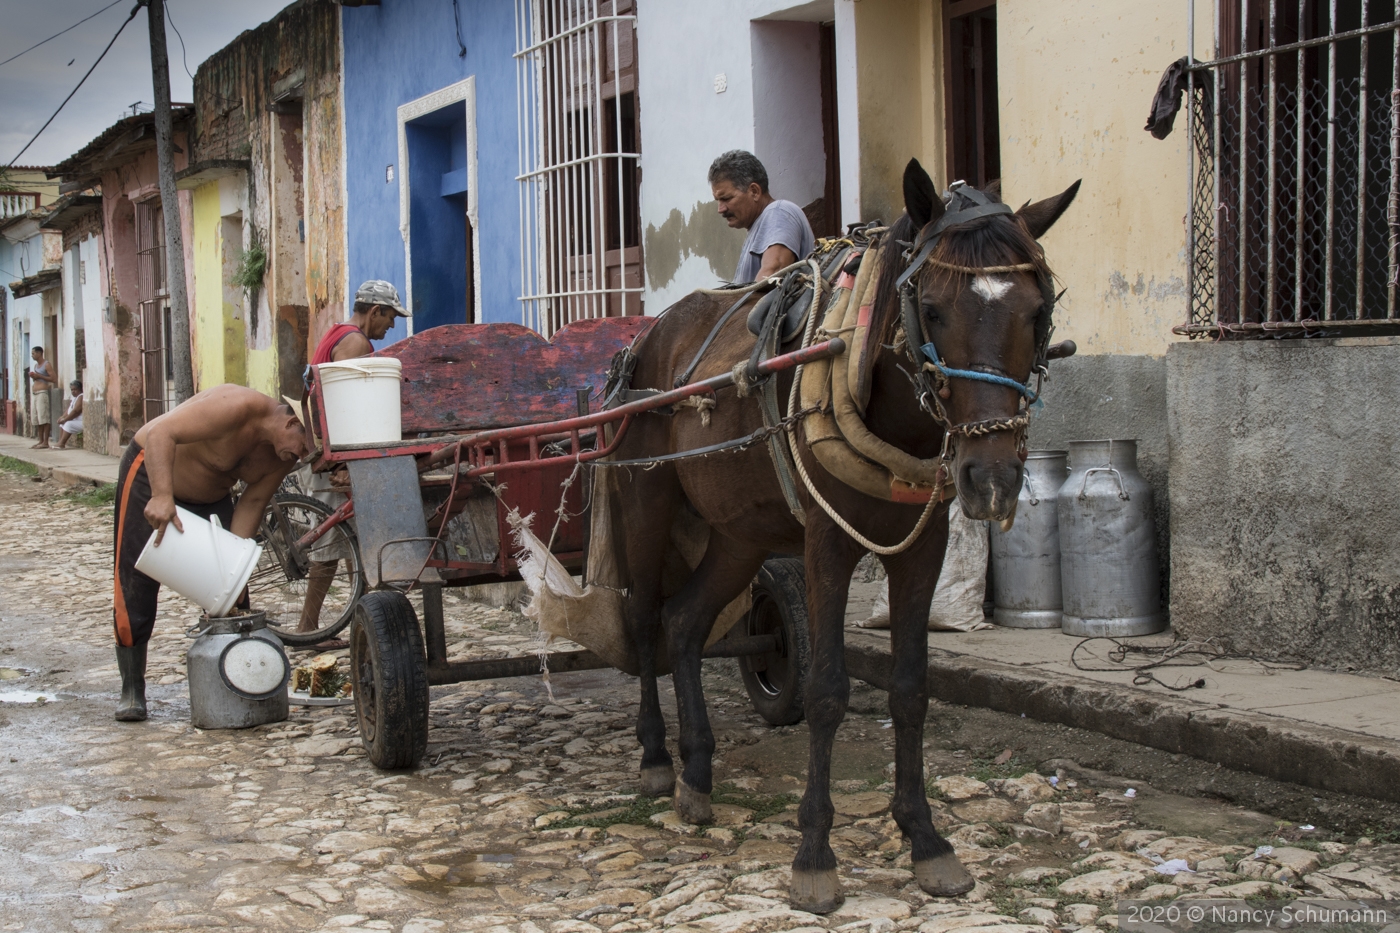 Collecting garbage, Trinidad, Cuba by Nancy Schumann